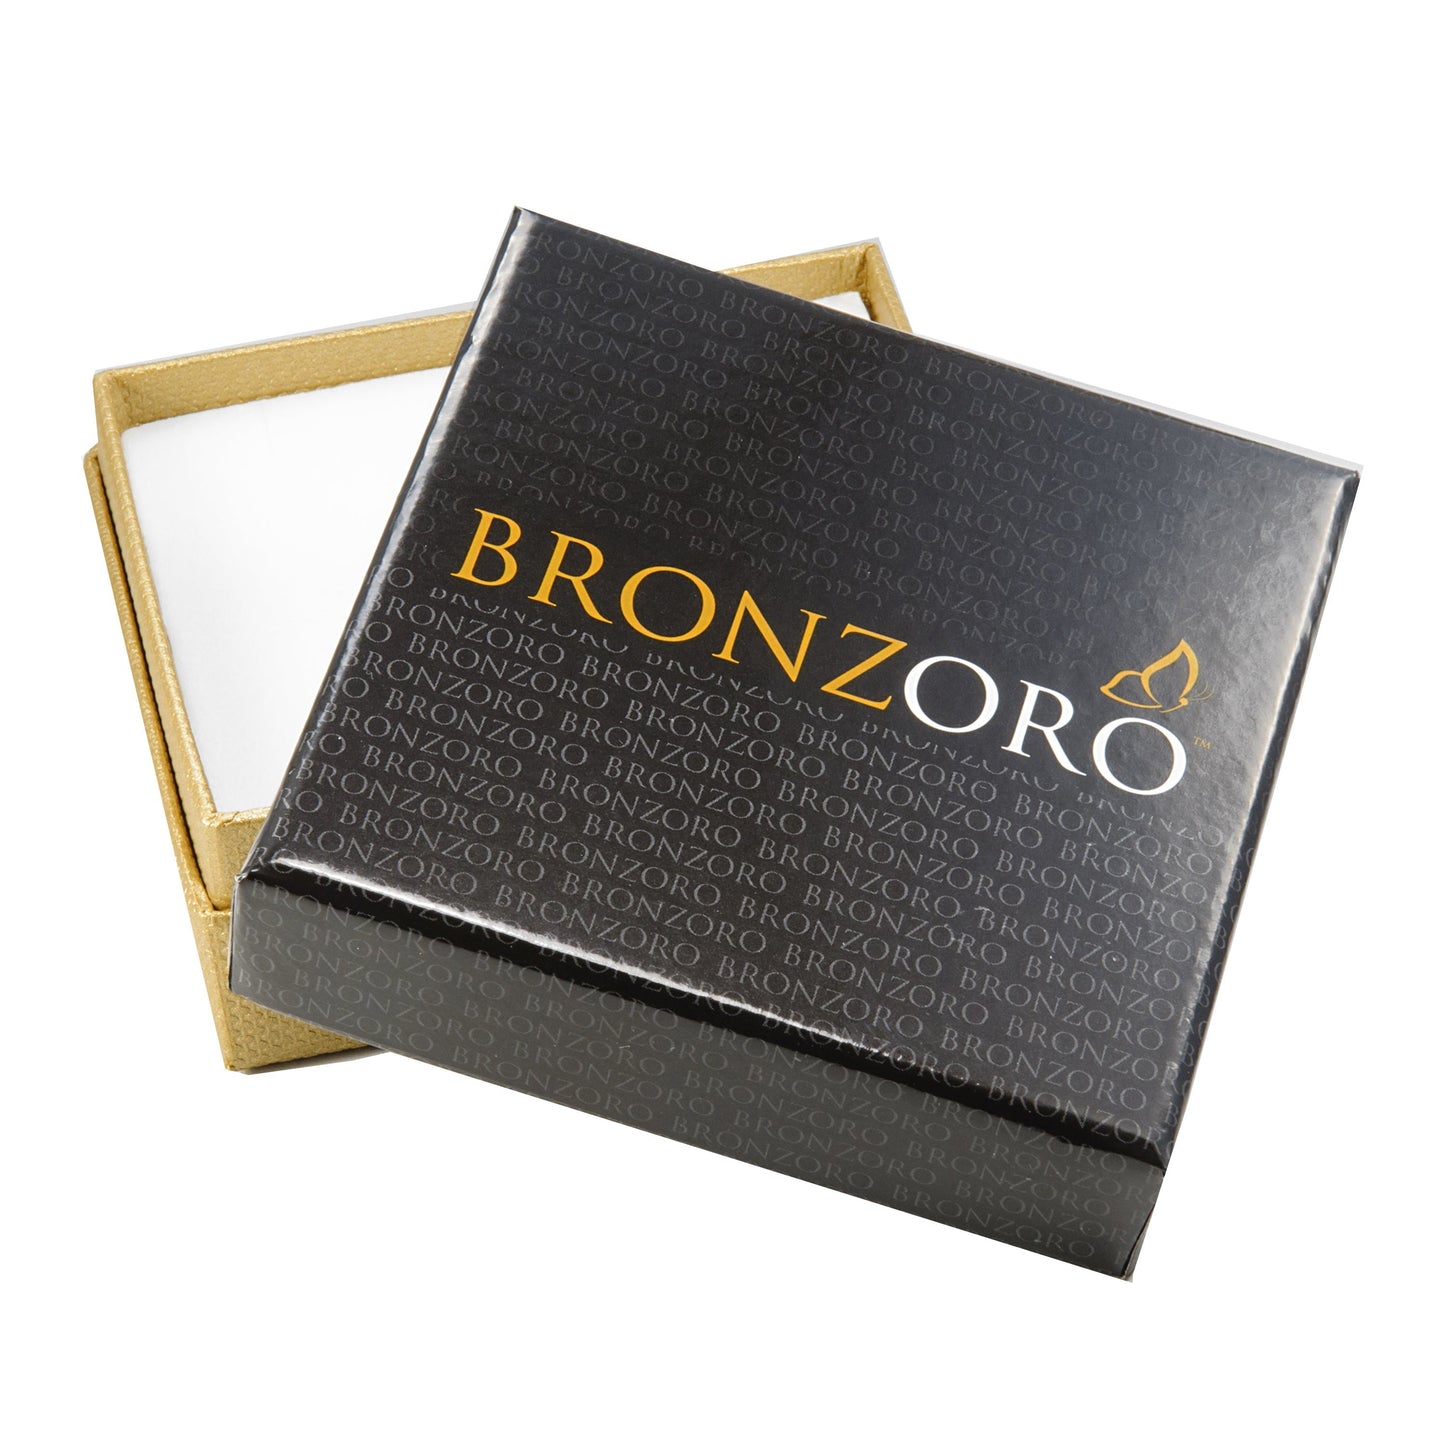 Bronzoro Rose Gold Omega Stretch Bracelet